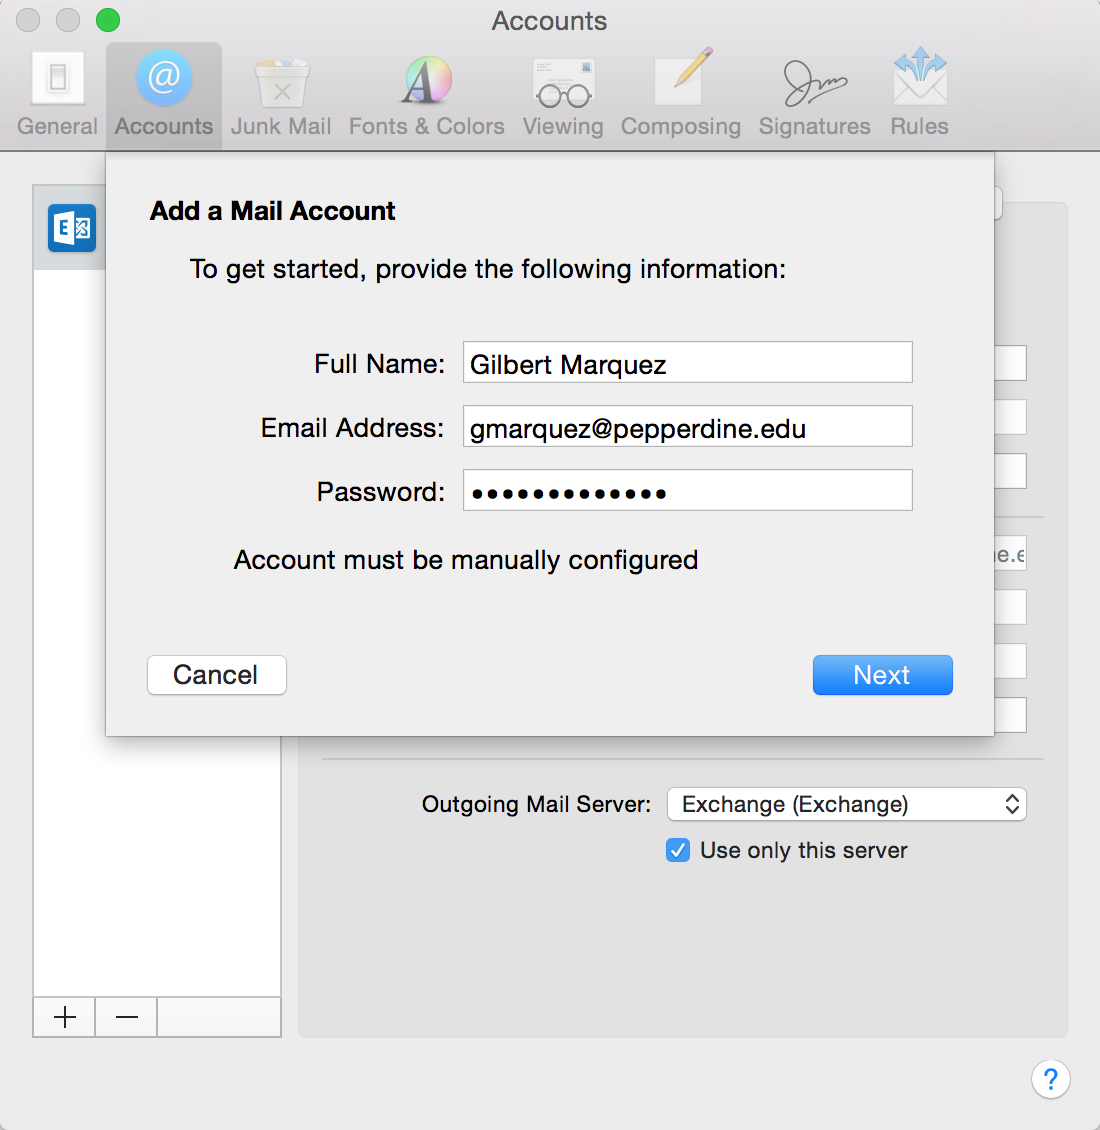 gmail mac mail settings